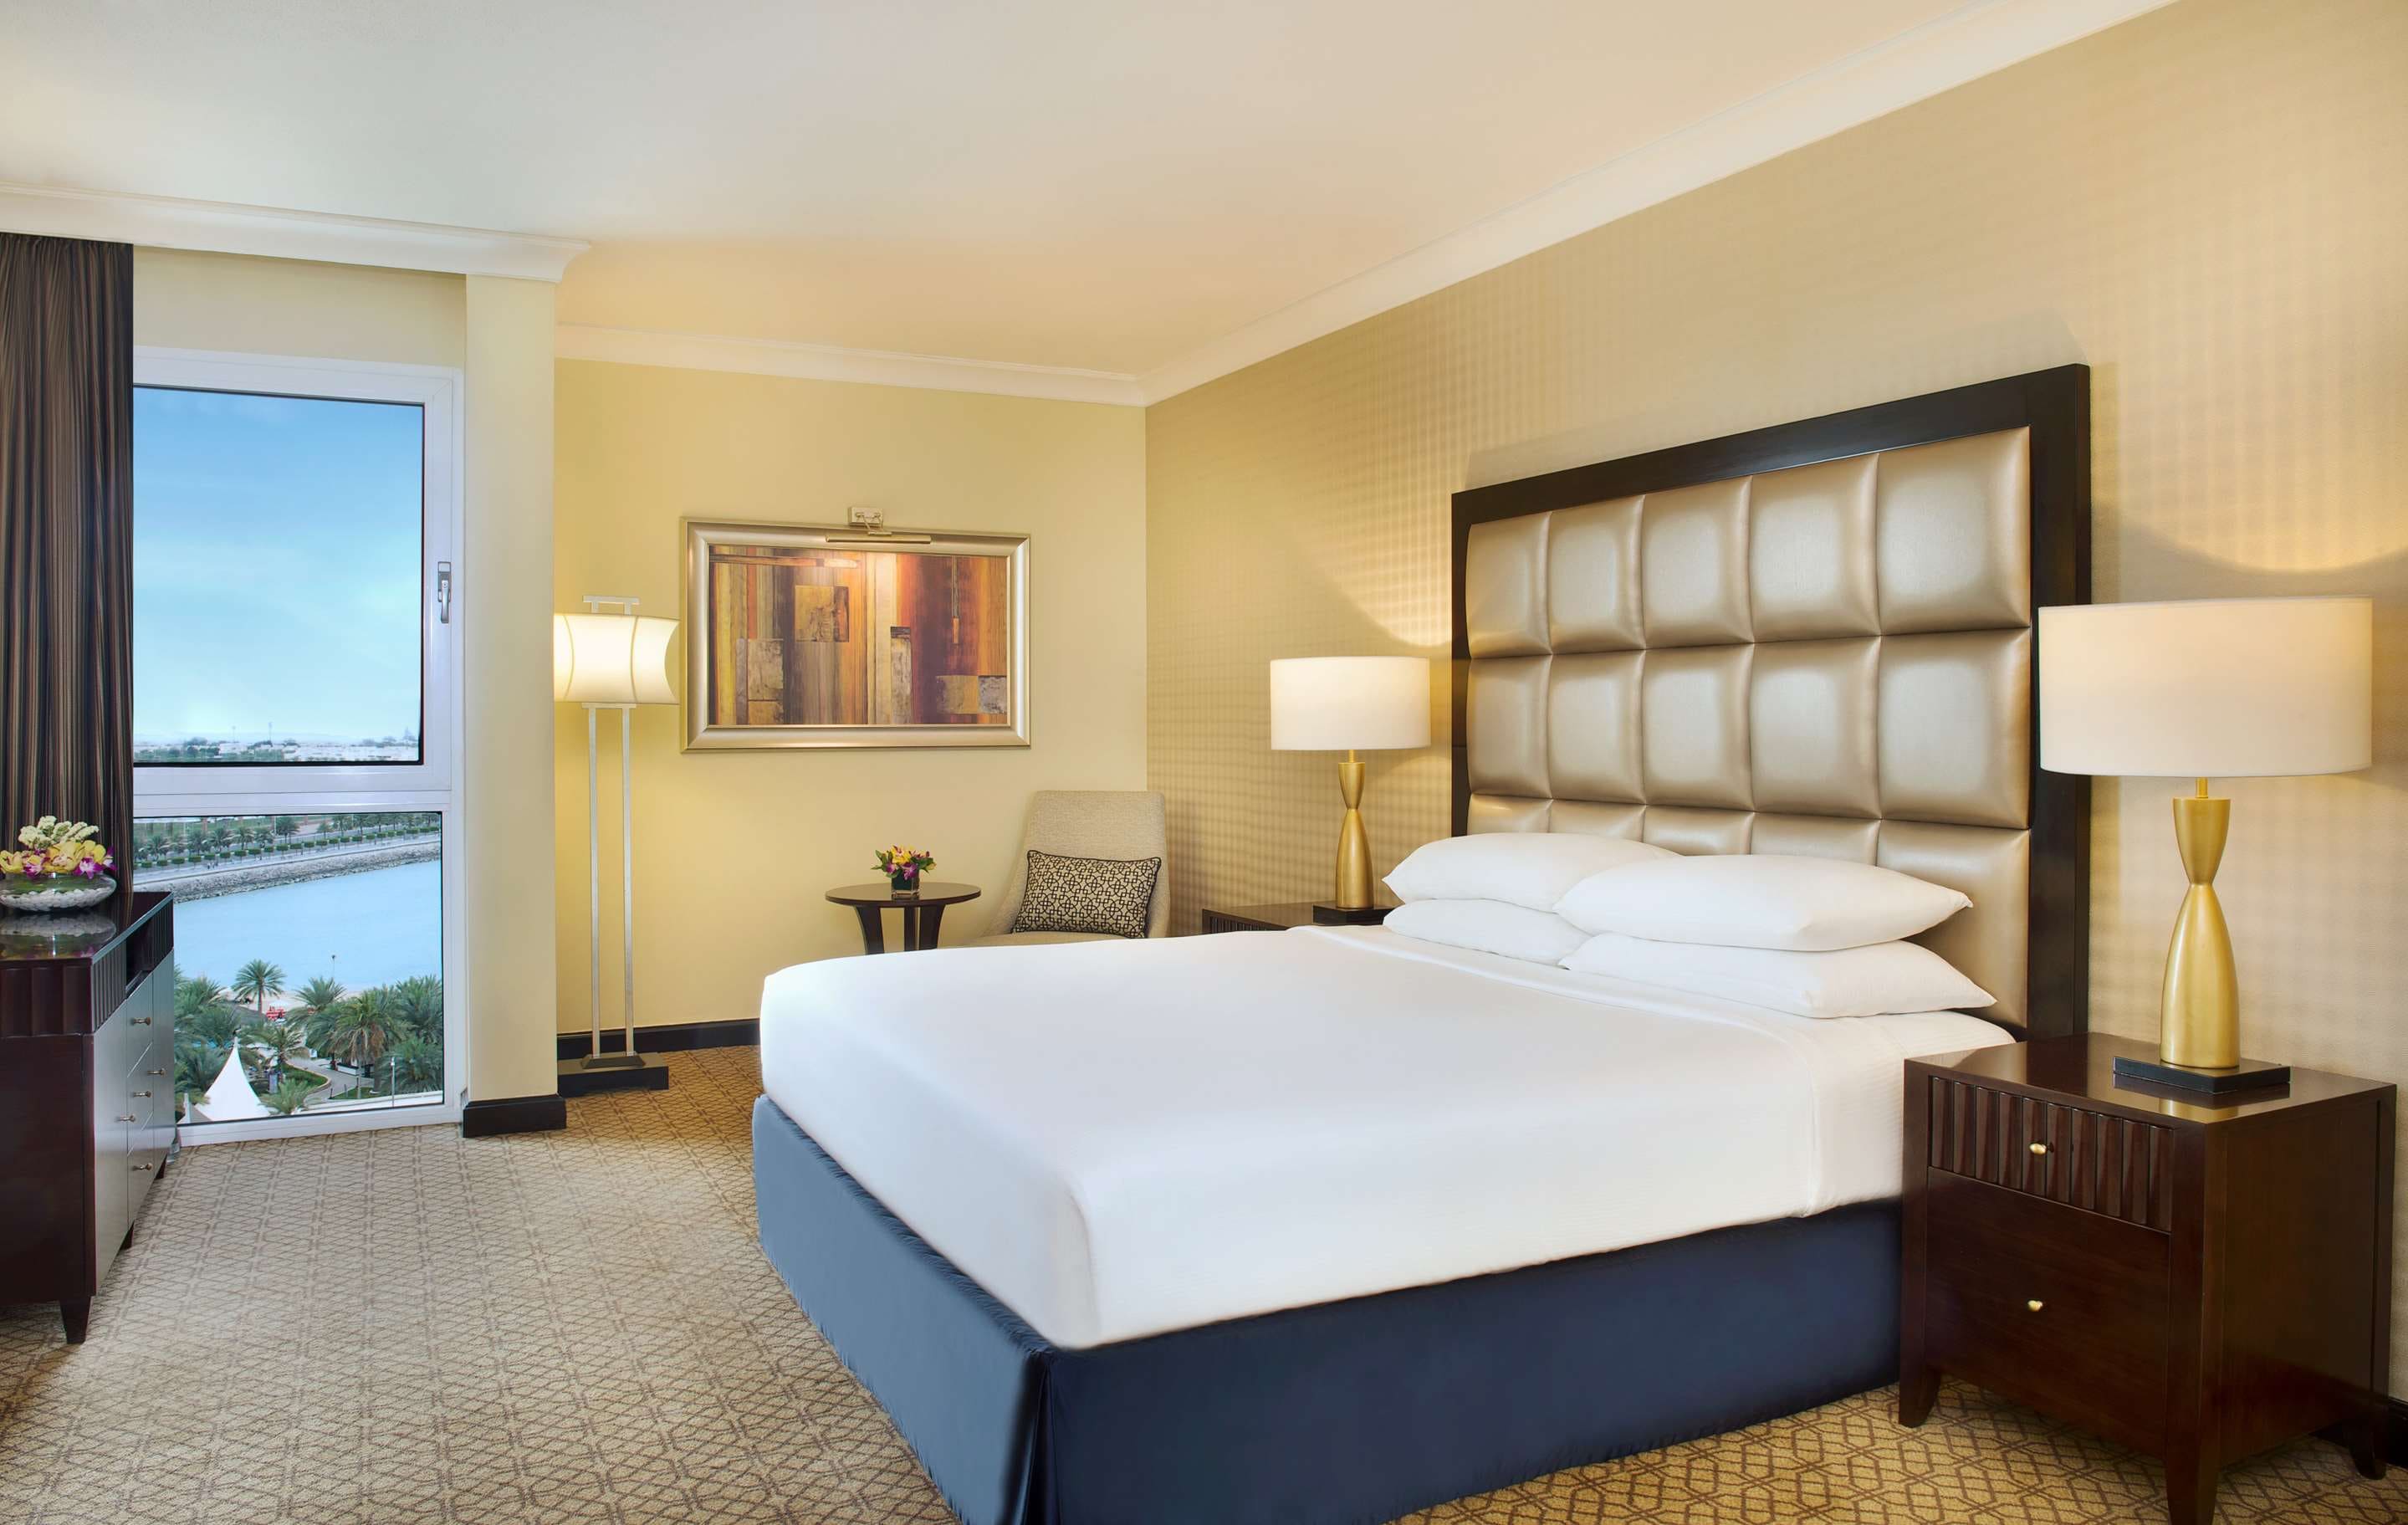 Radisson Blu Hotel & Resort, Abu Dhabi Corniche King Bedroom